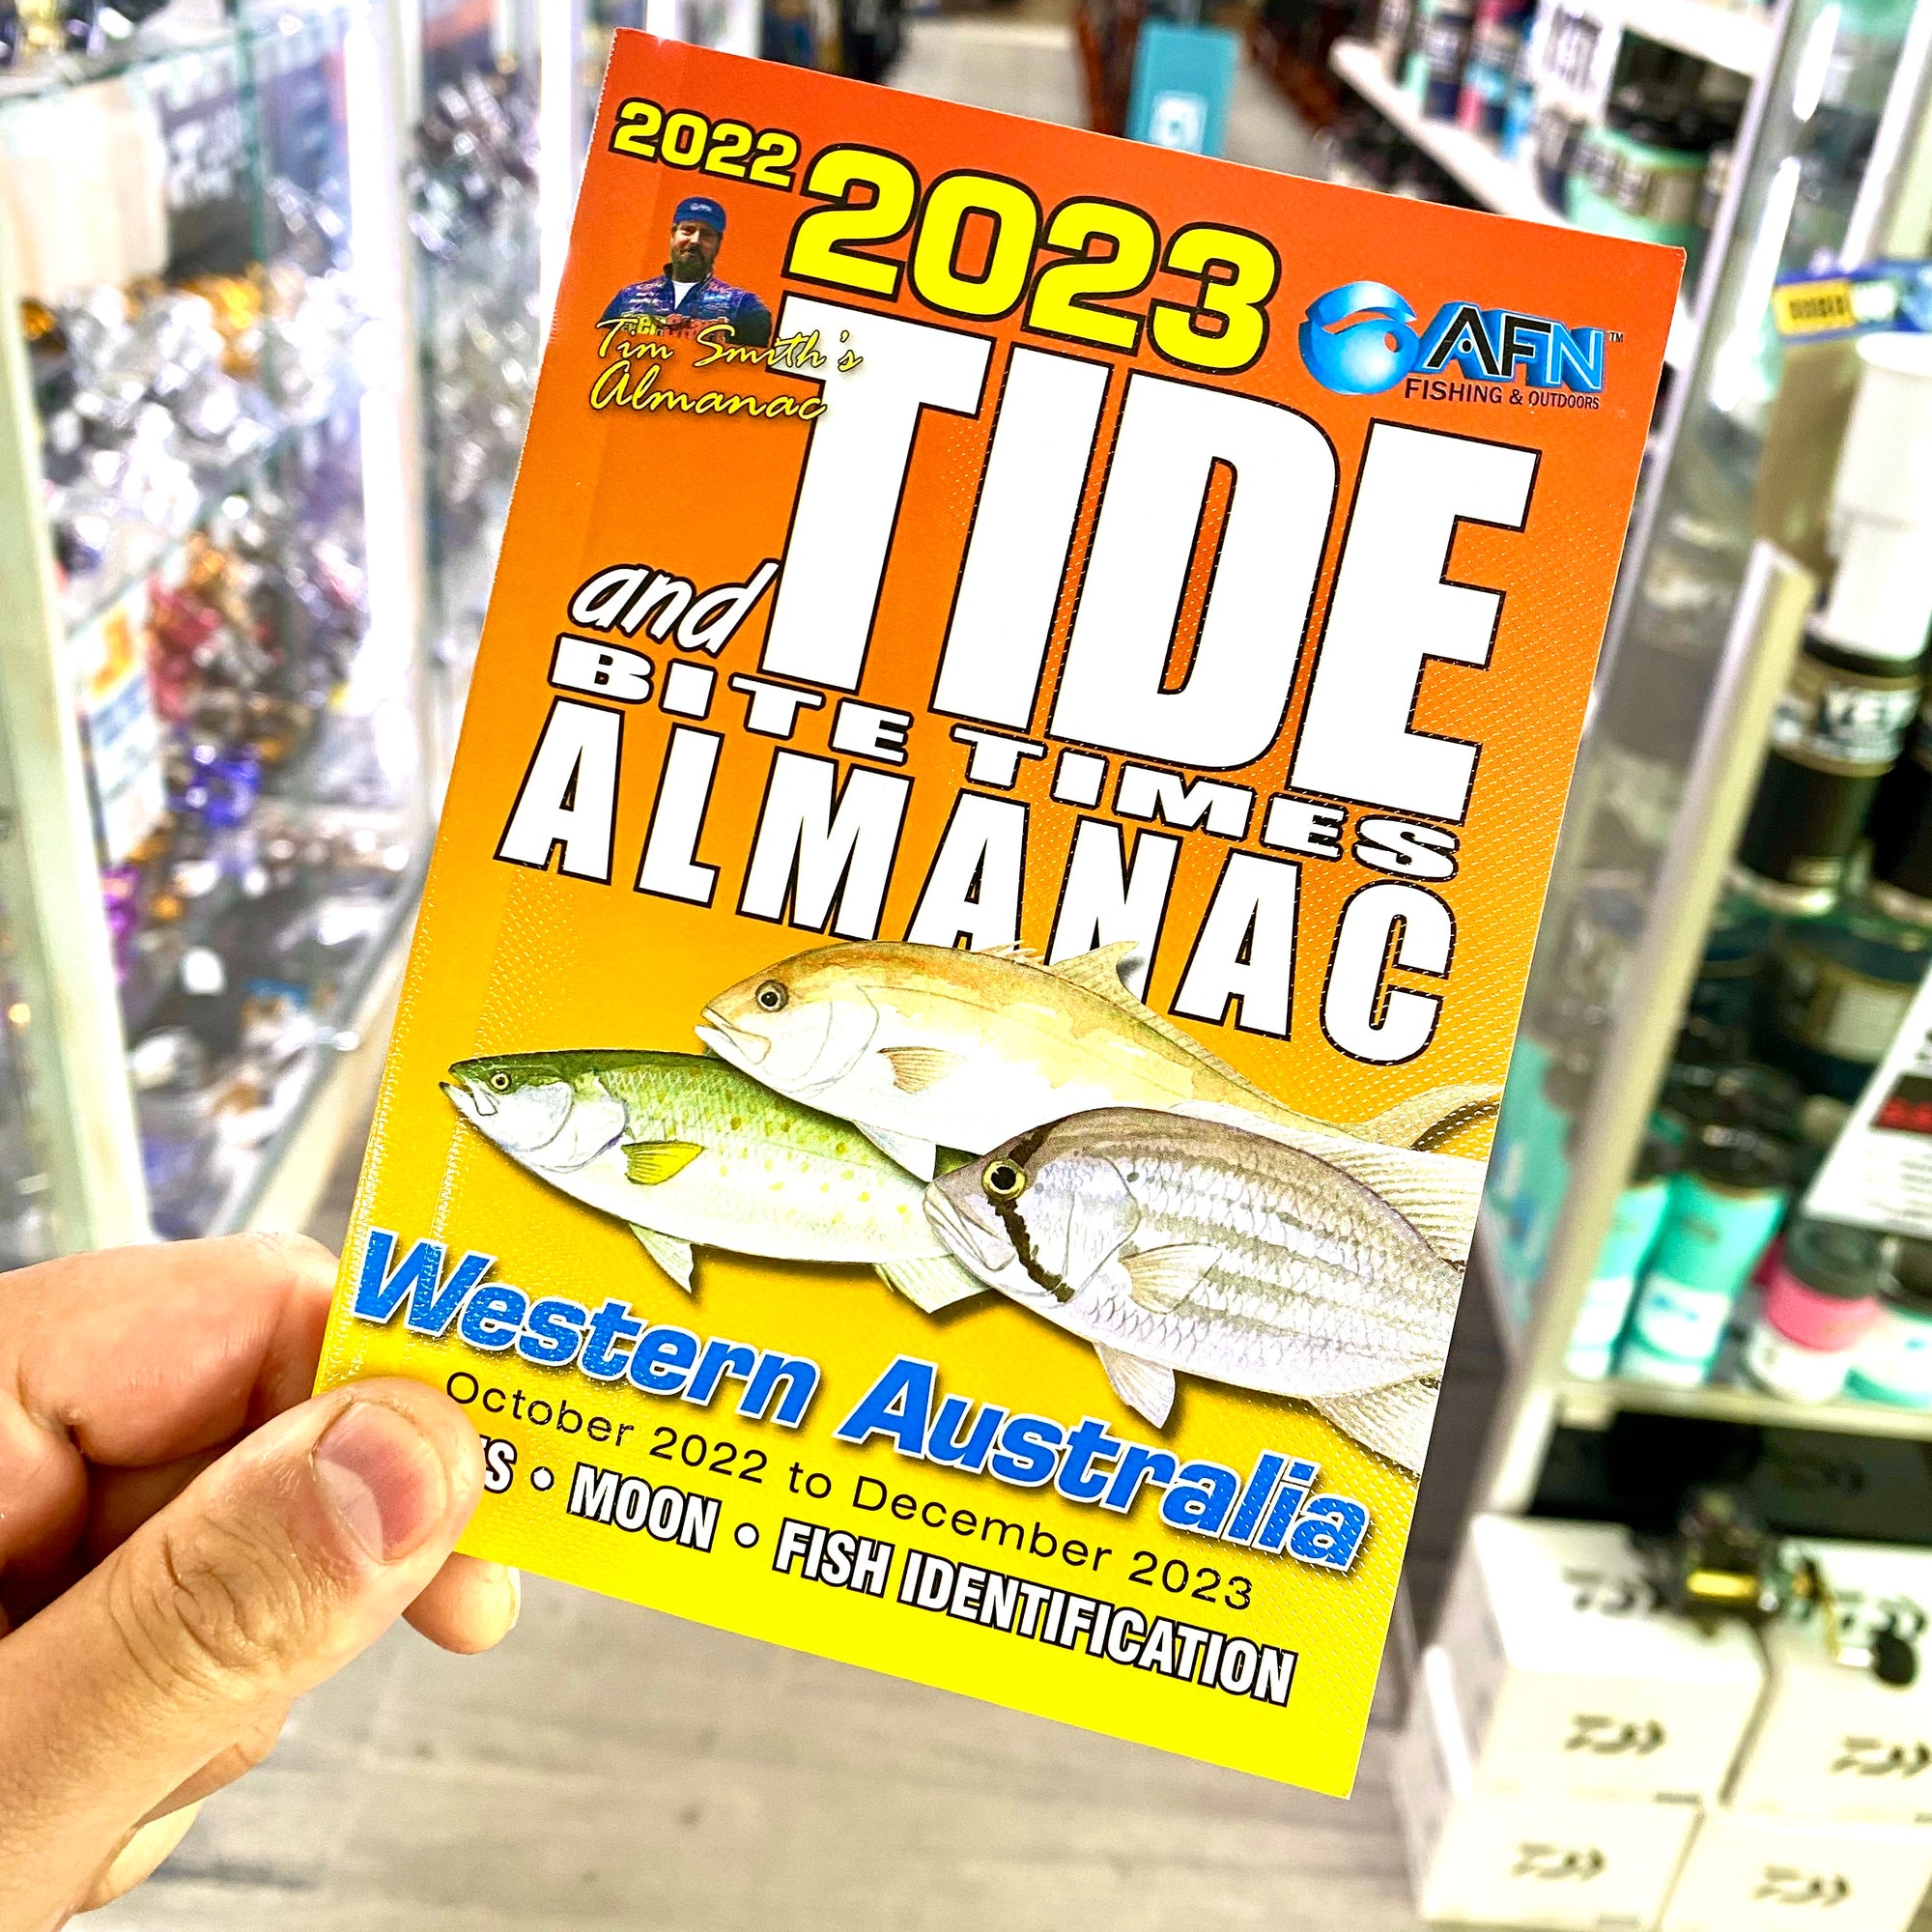 AFN Western Australia Tide And Bite Times Almanac 2023